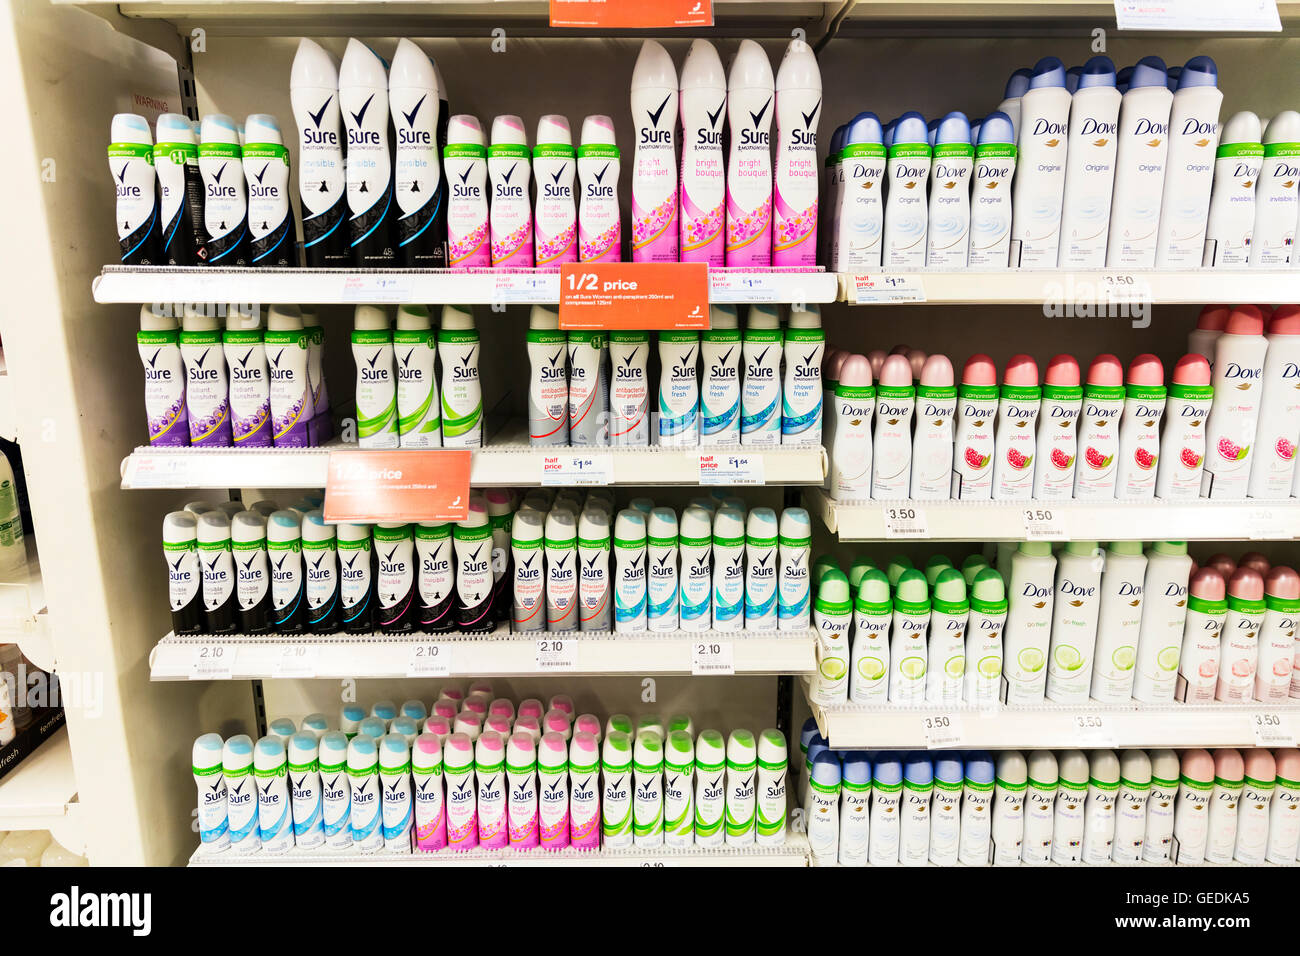 Sure anti perspirant deodorant deodorants tins Dove compressed aerosol cans aerosols  products chemist shop display UK England Stock Photo